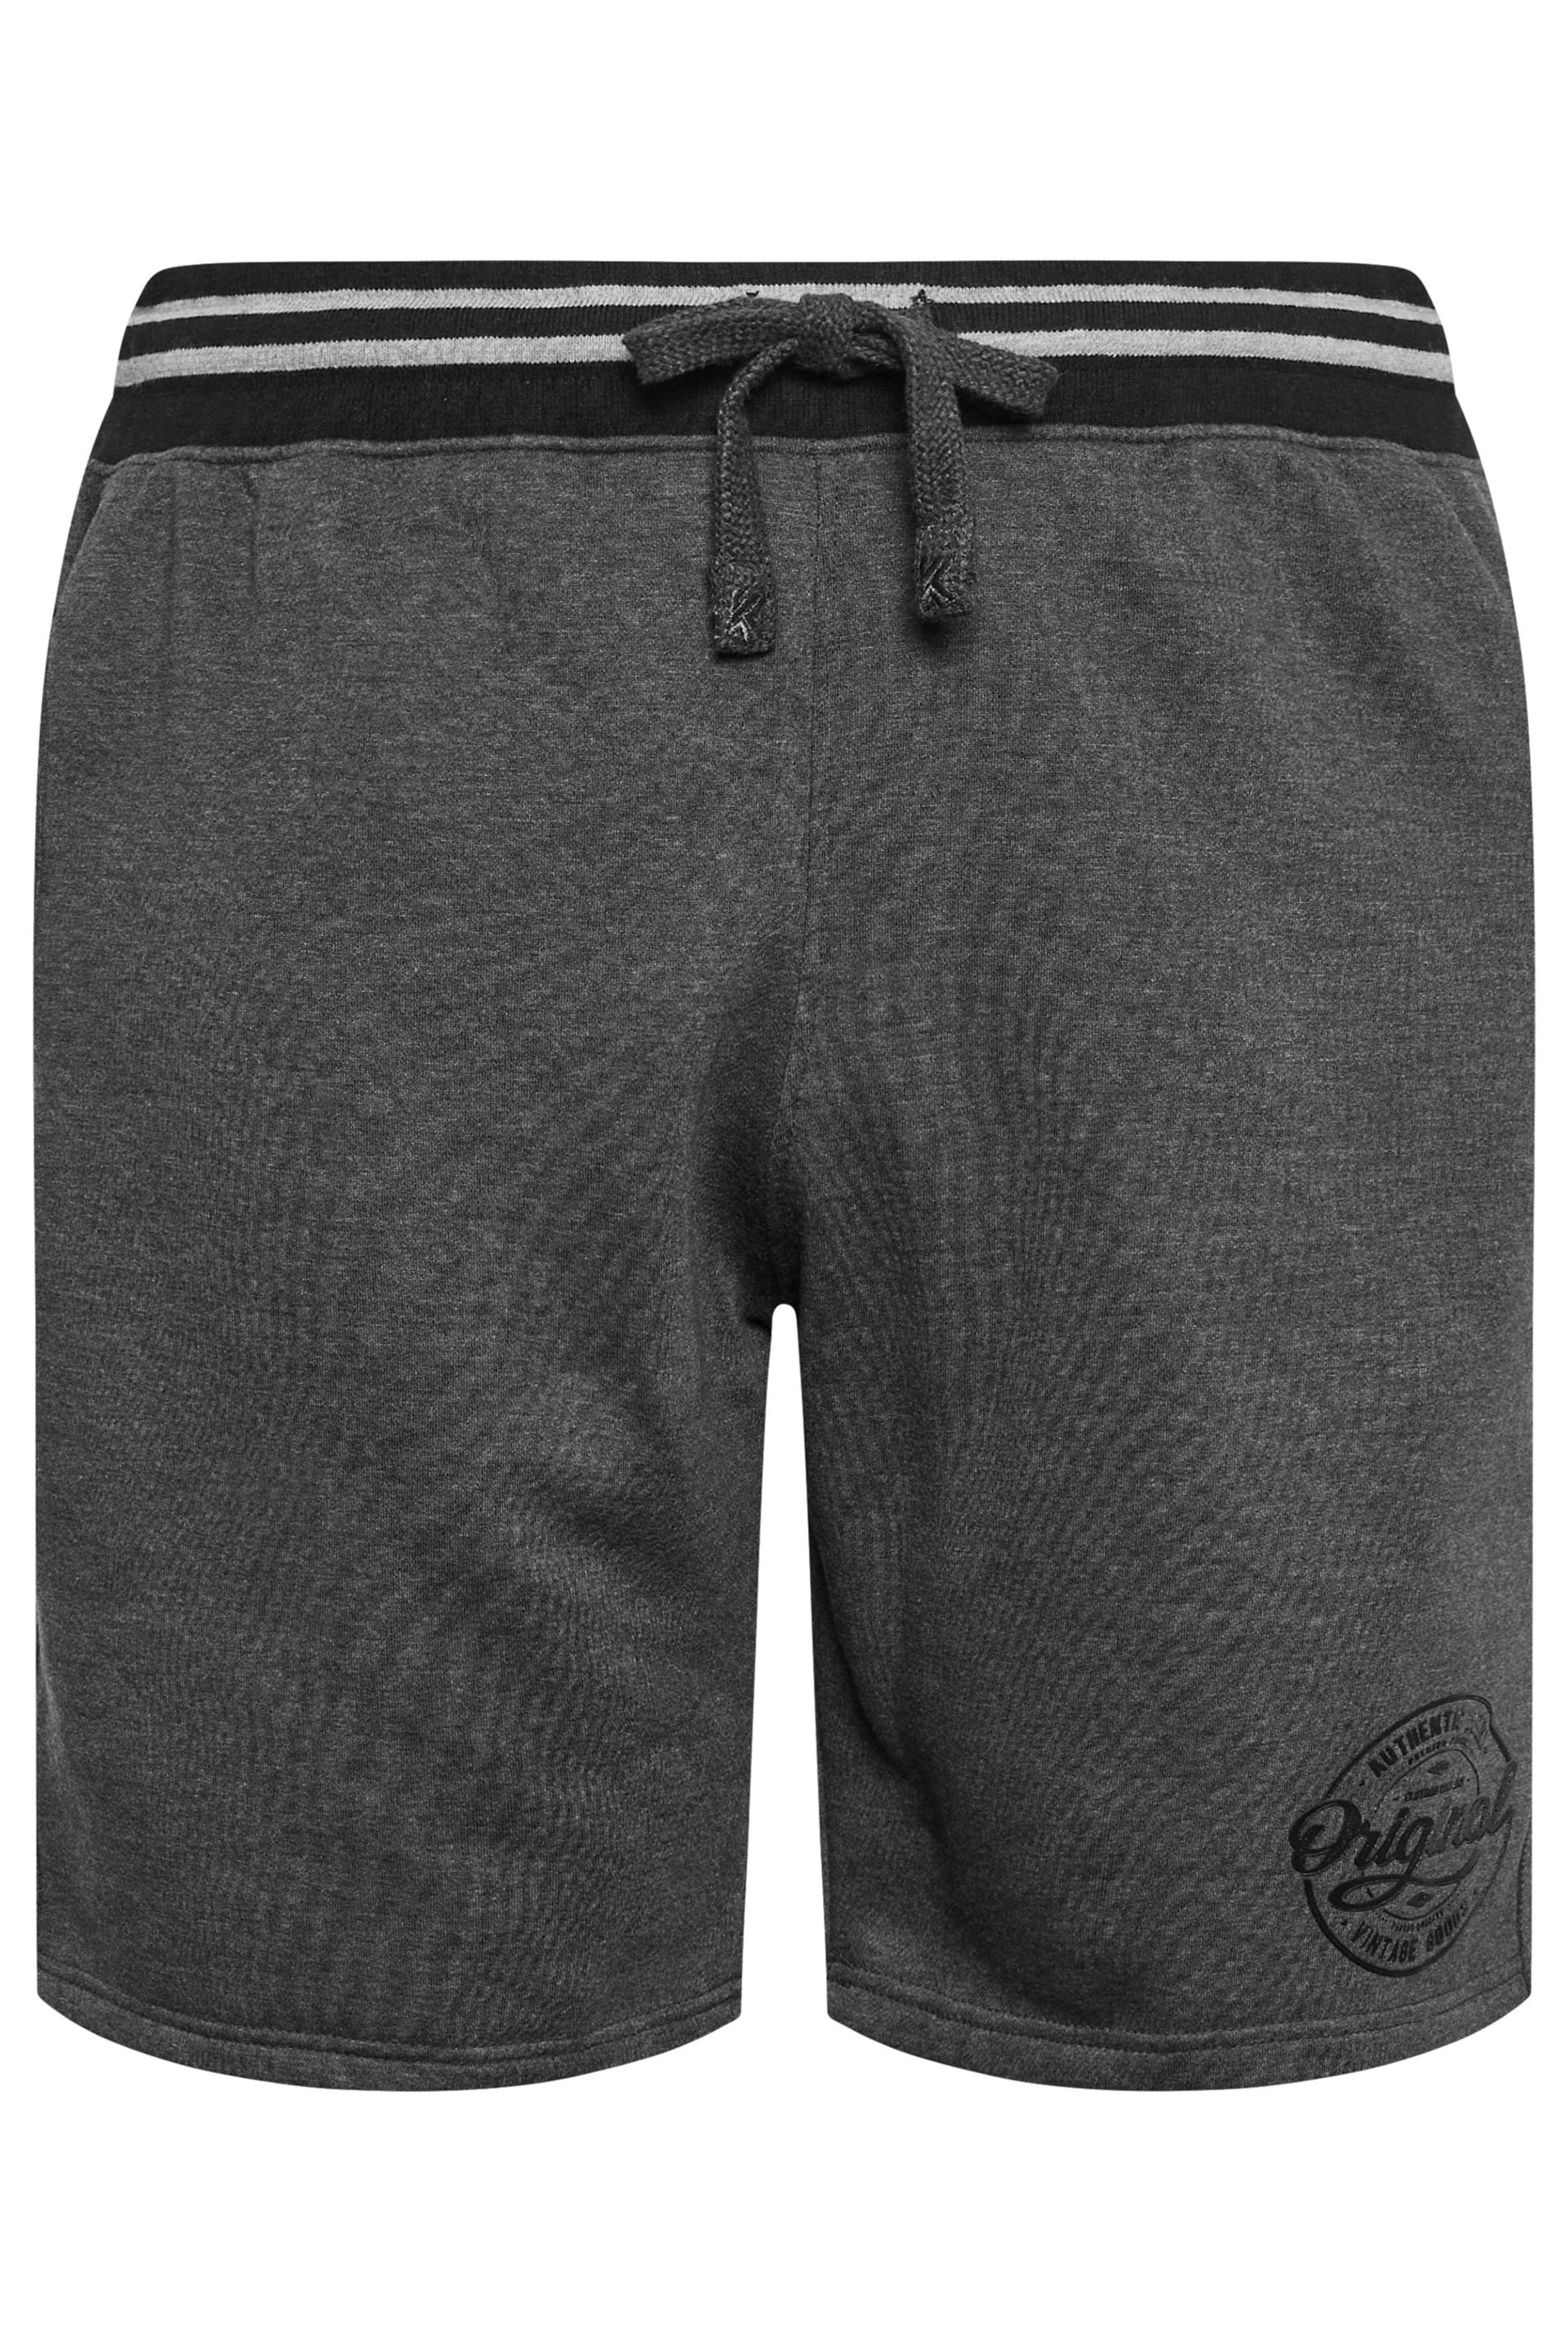 KAM Big & Tall Charcoal Grey Jog Shorts | BadRhino 3